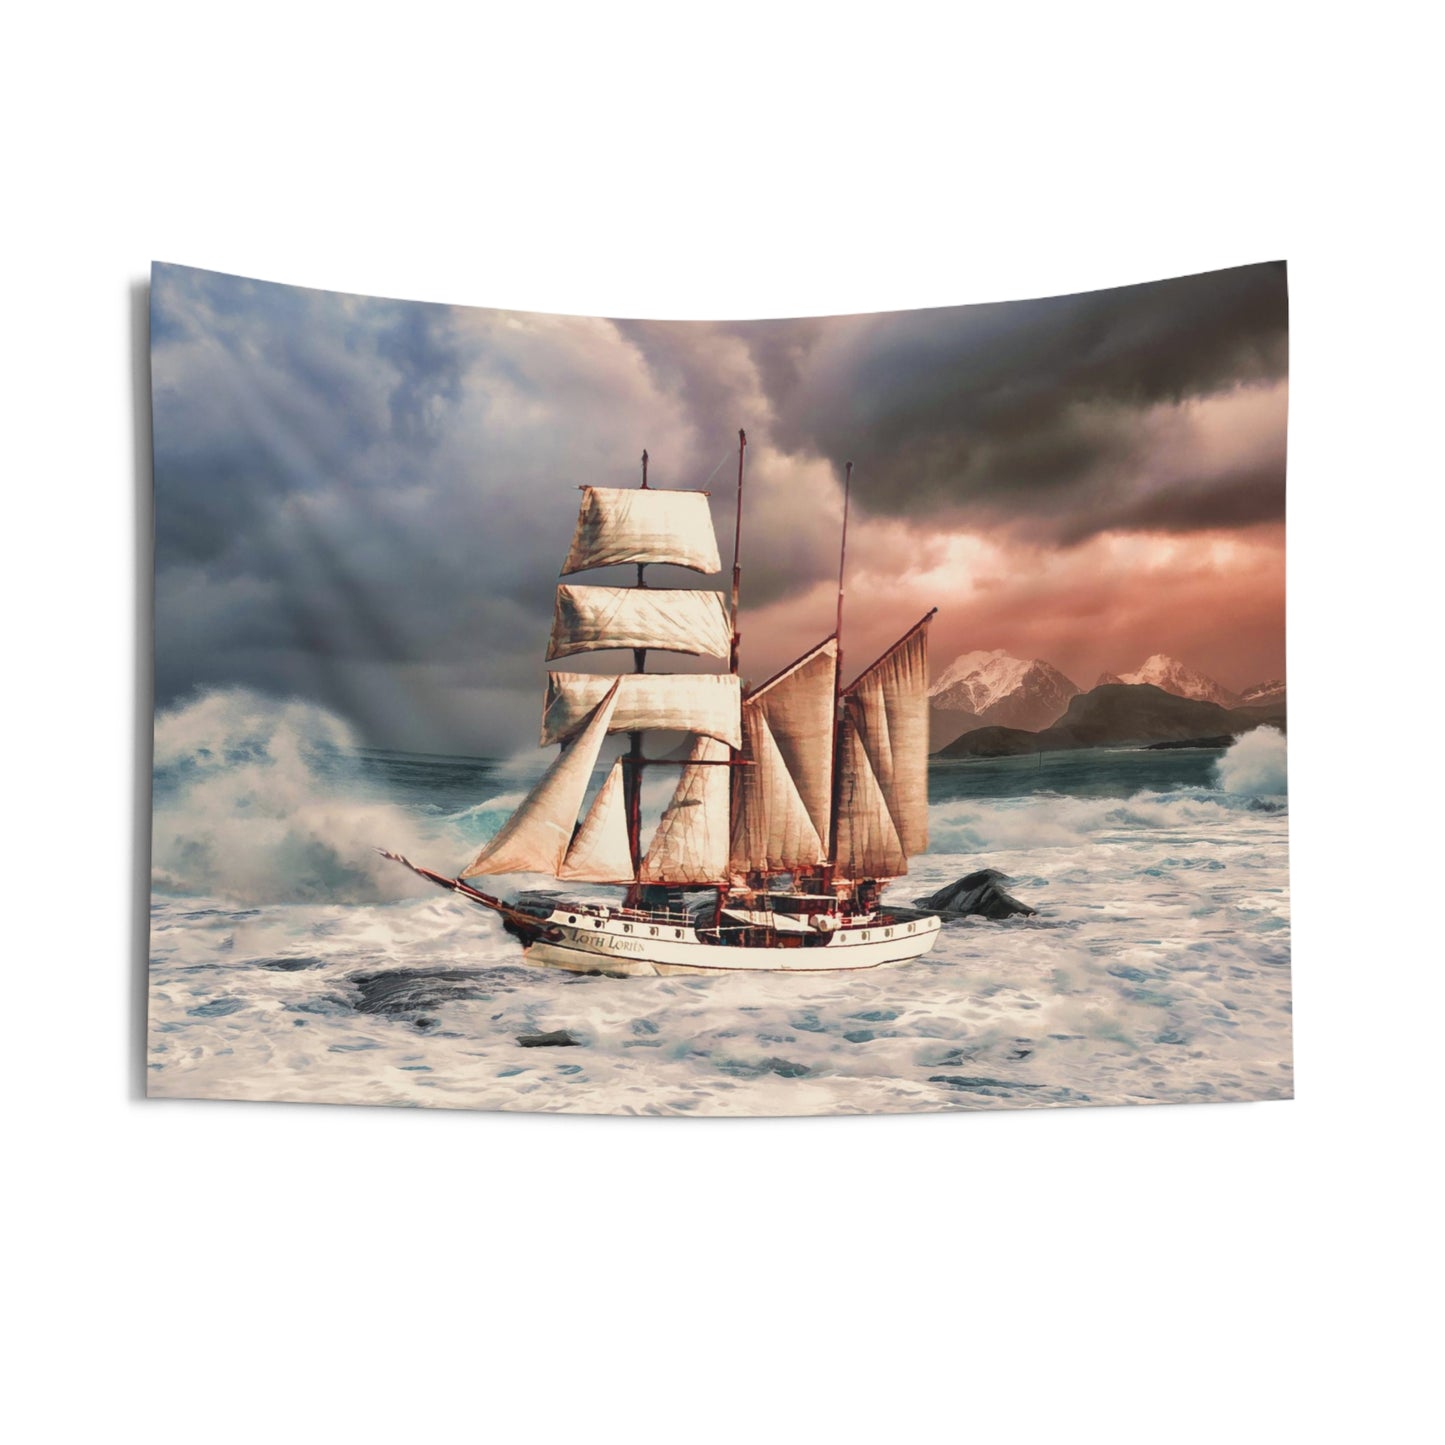 Stormship Tapestry